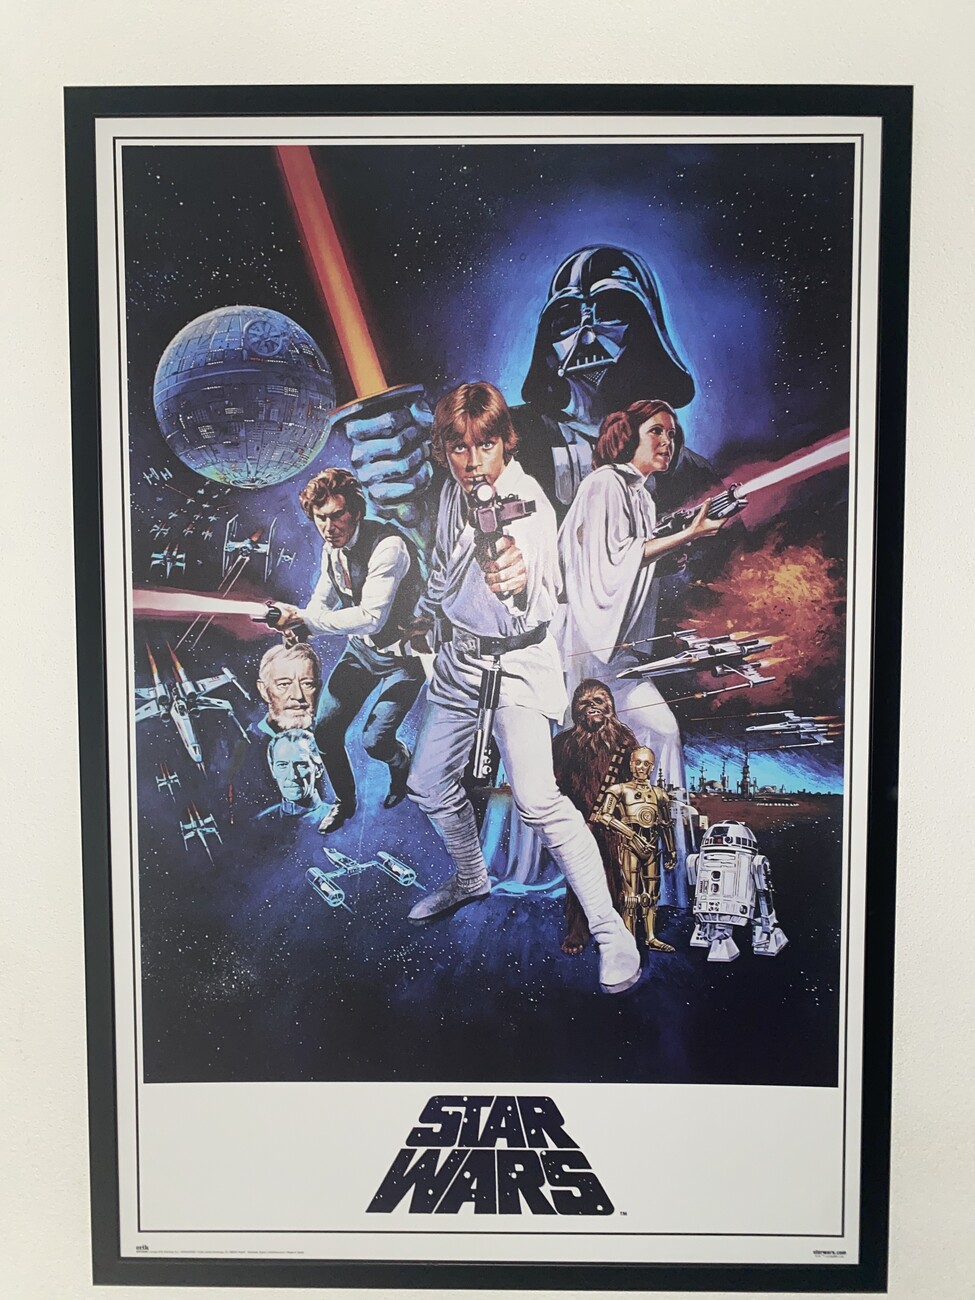 Star Wars Movie Posters Kitchen Towels